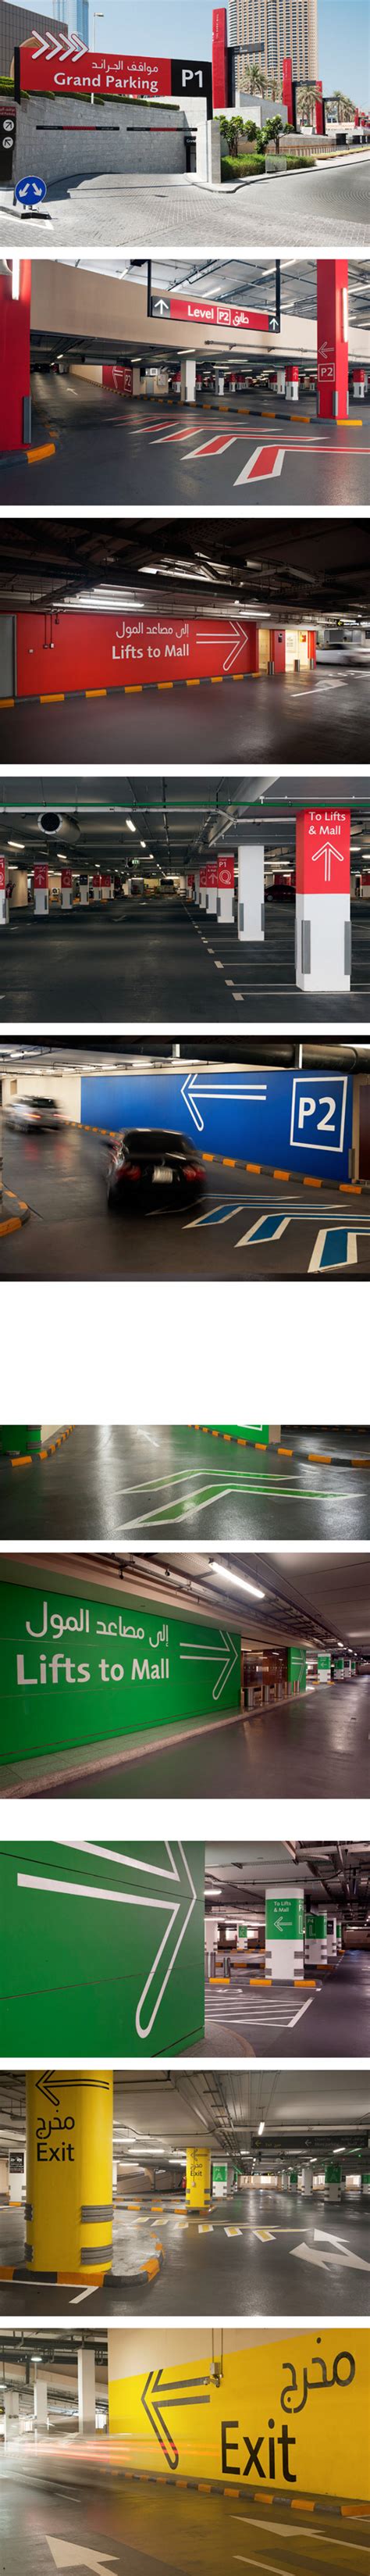 Car park signage Wayfinding Signs, Wayfinding System, Environmental Graphic Design ...